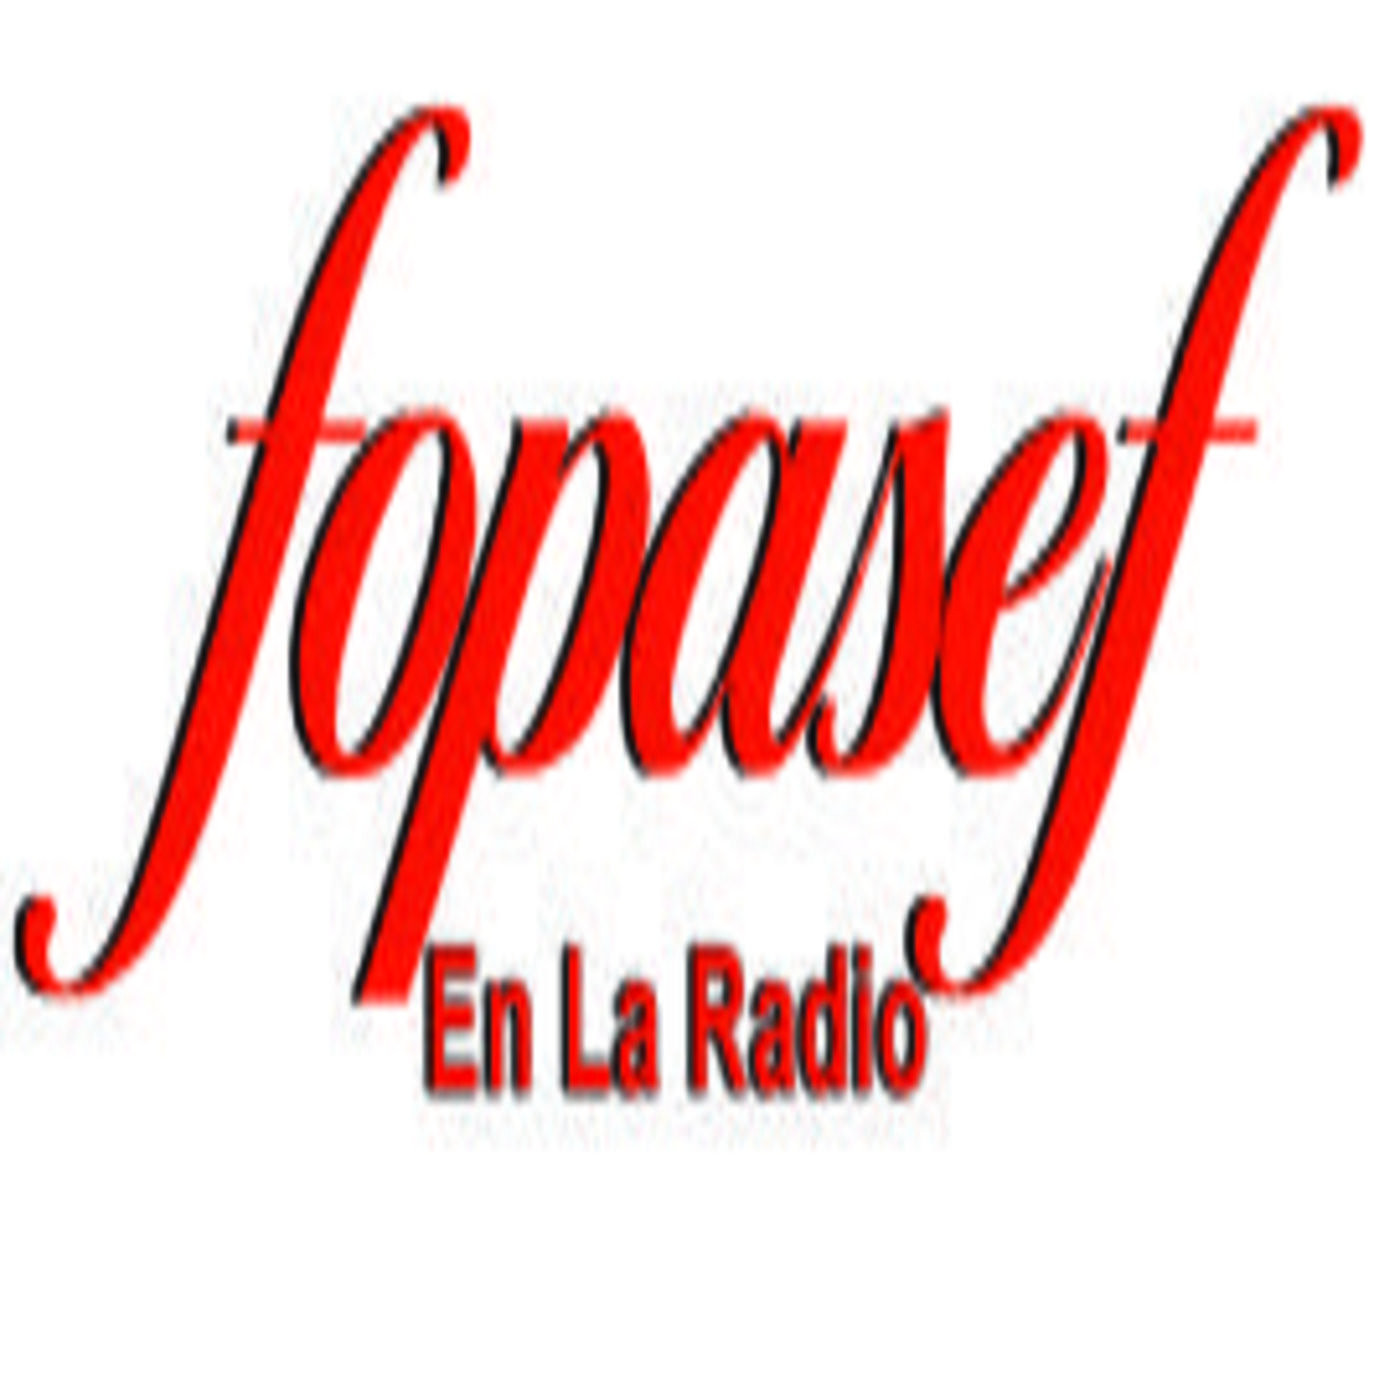 Fopasef en la radio 07-12-2015